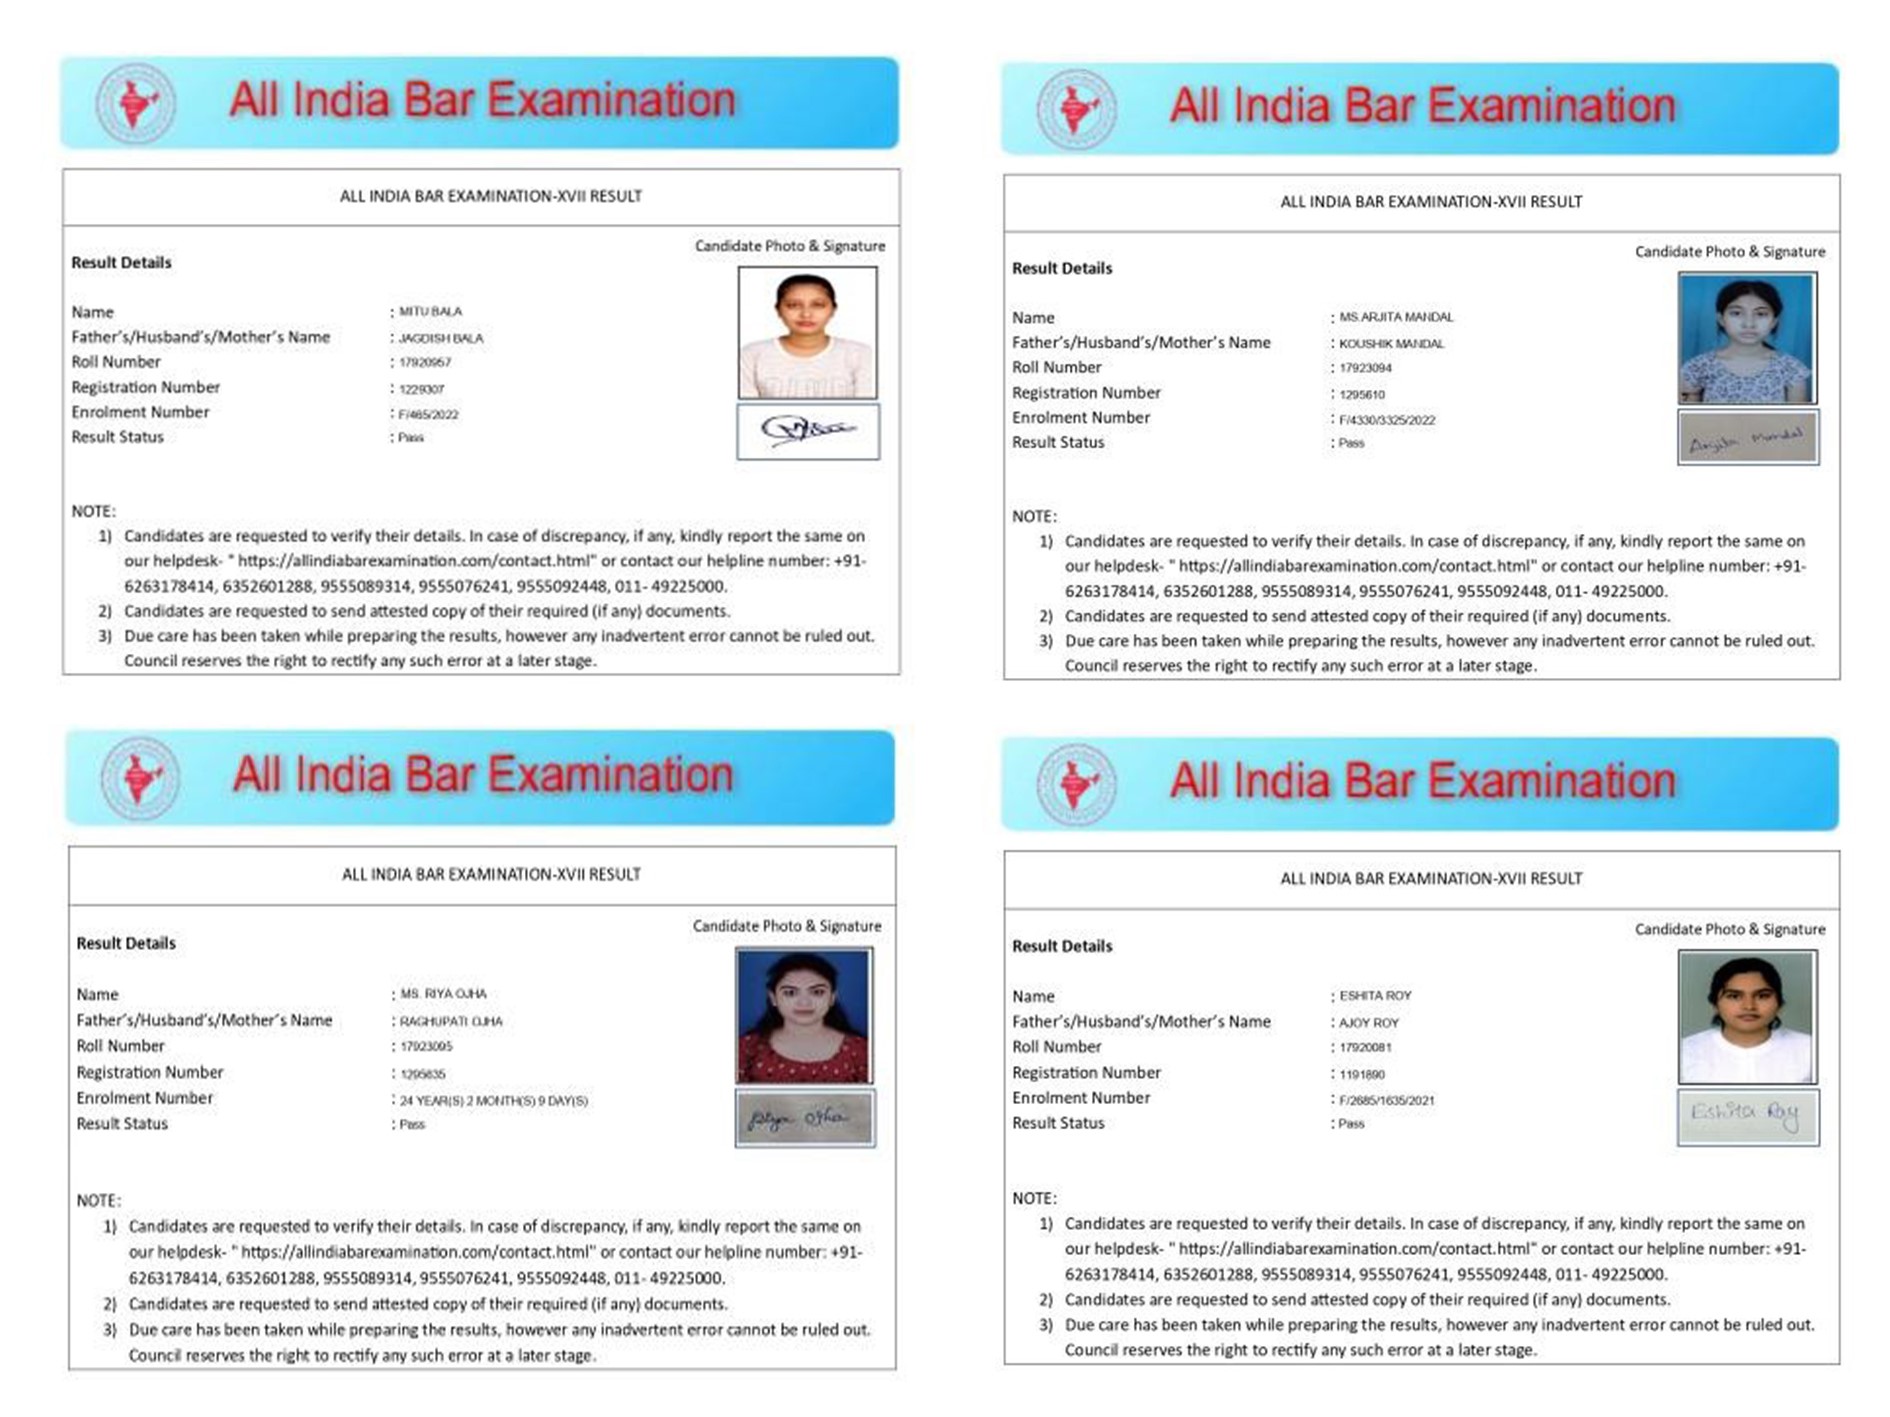 LLM students successfully qualify All India Bar Examination!